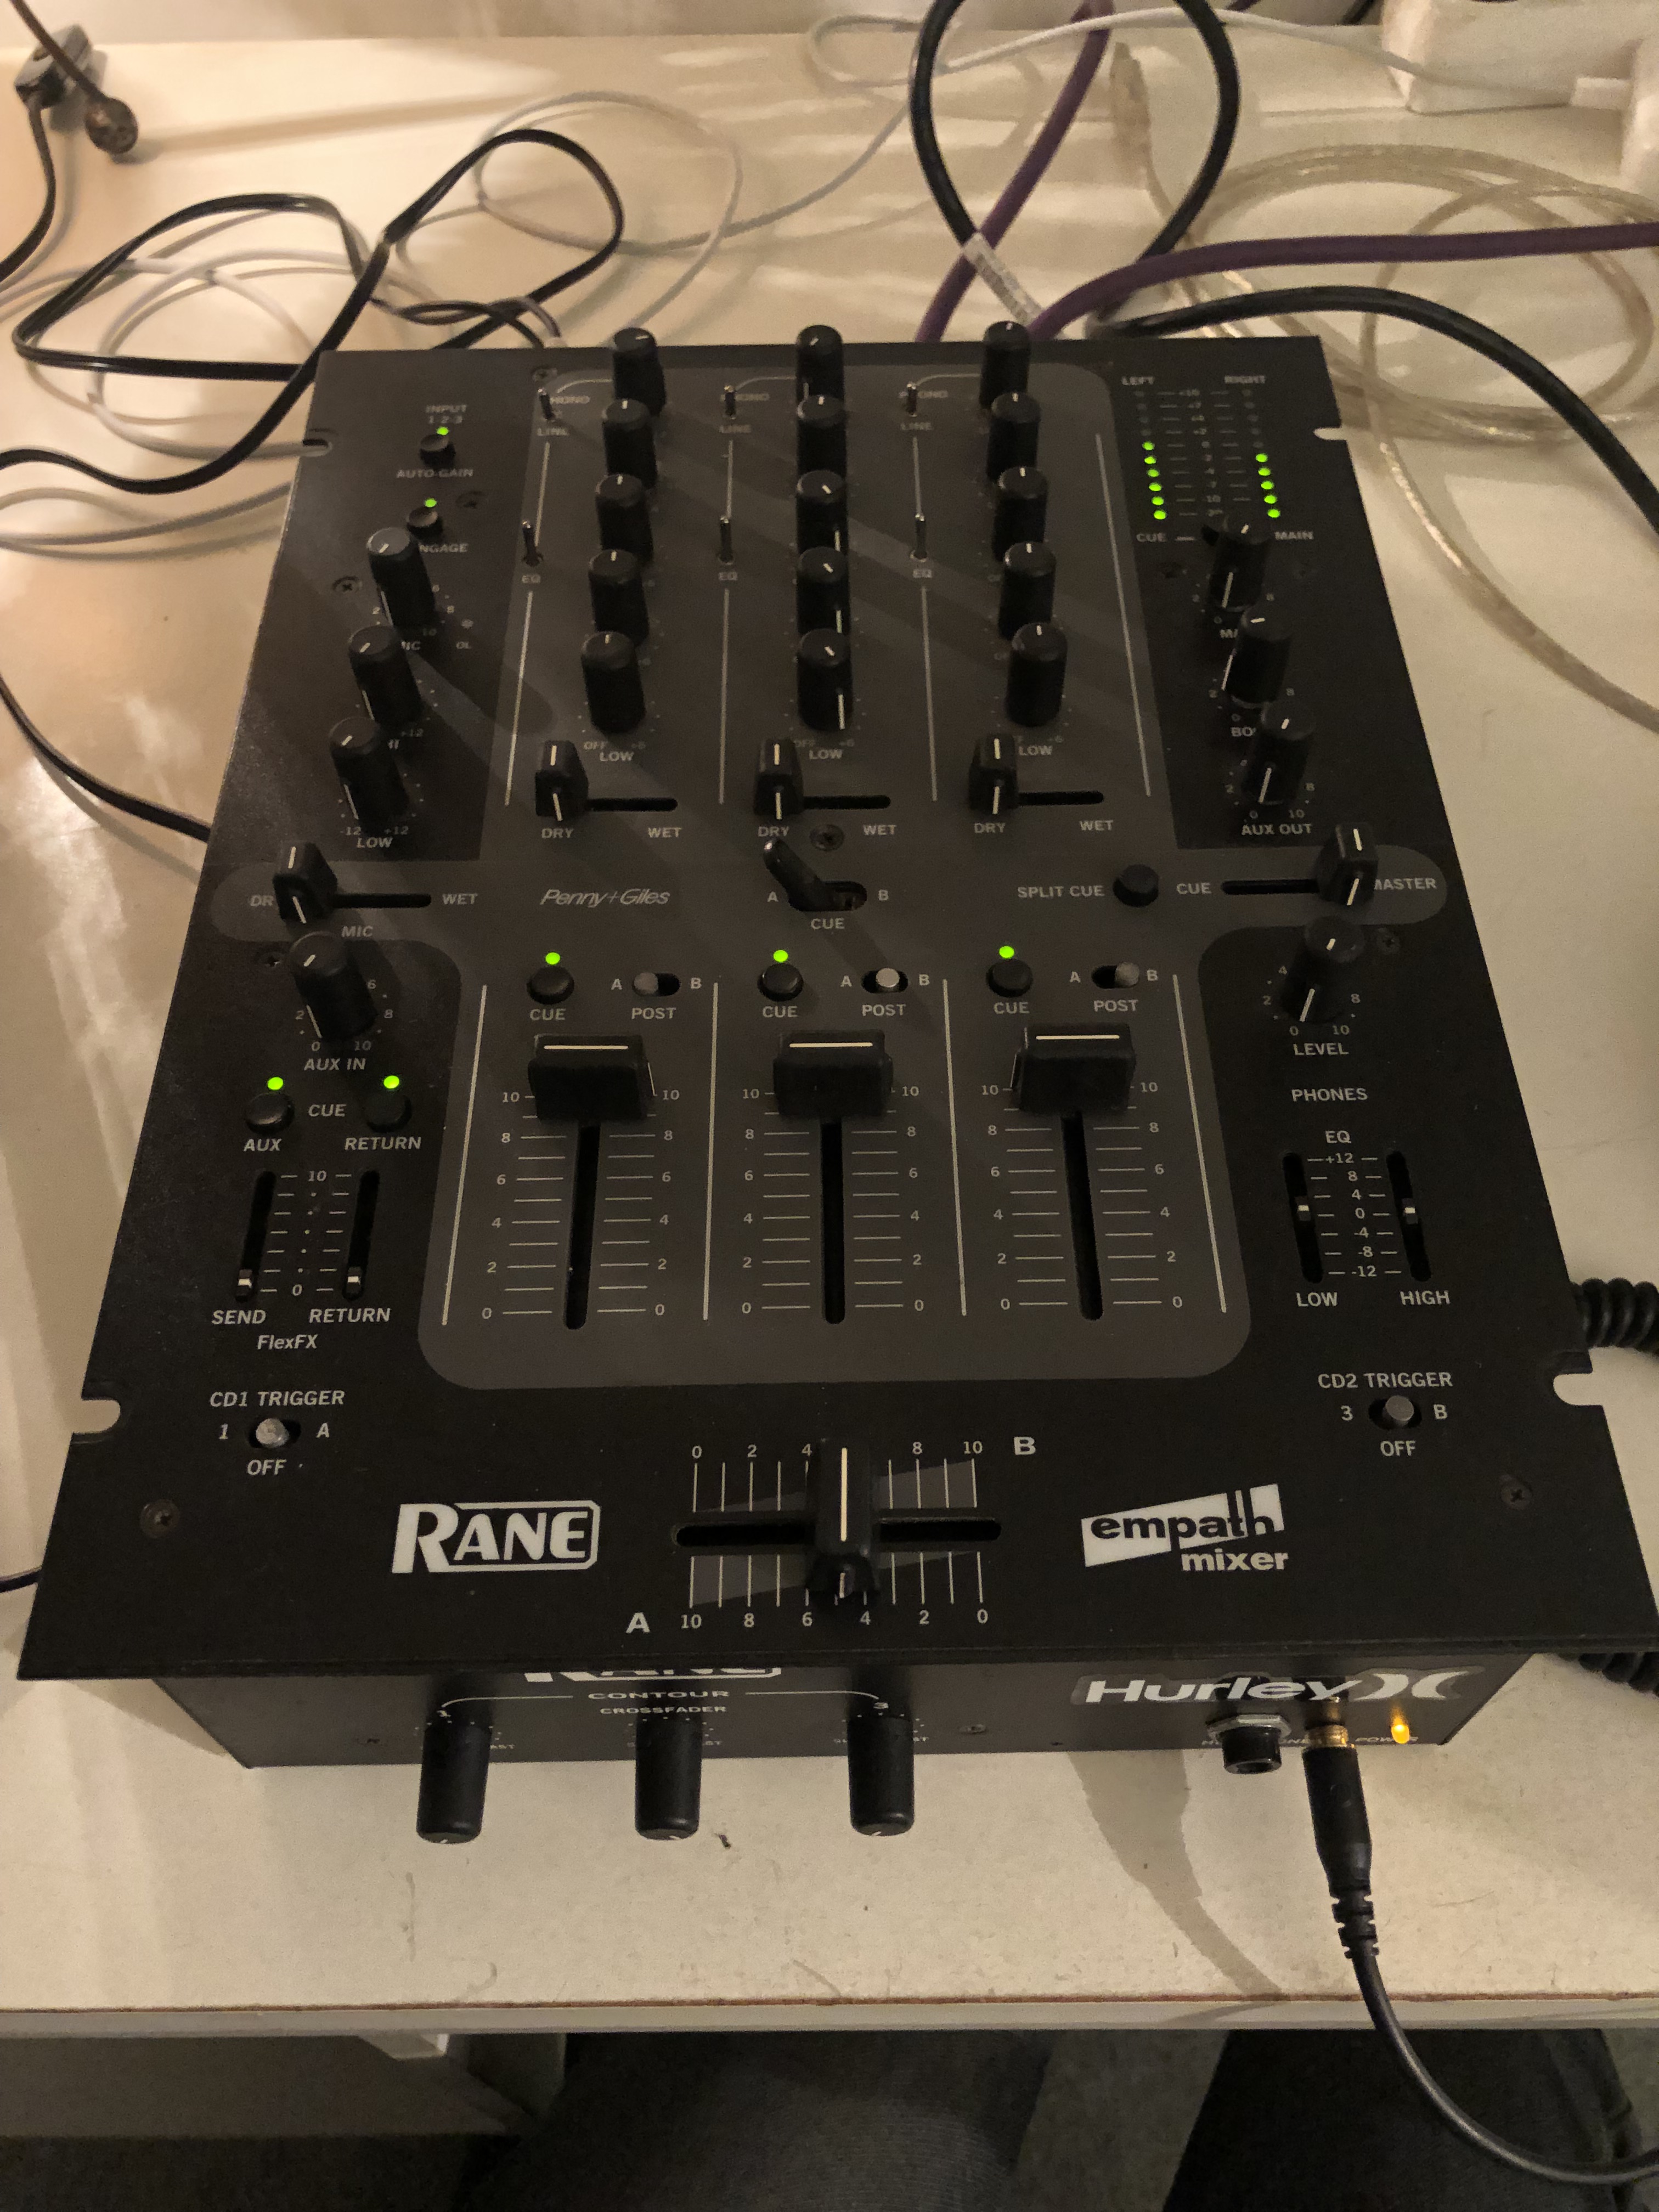 RANE empath エンパス DJミキサー 名機 - DJ機器